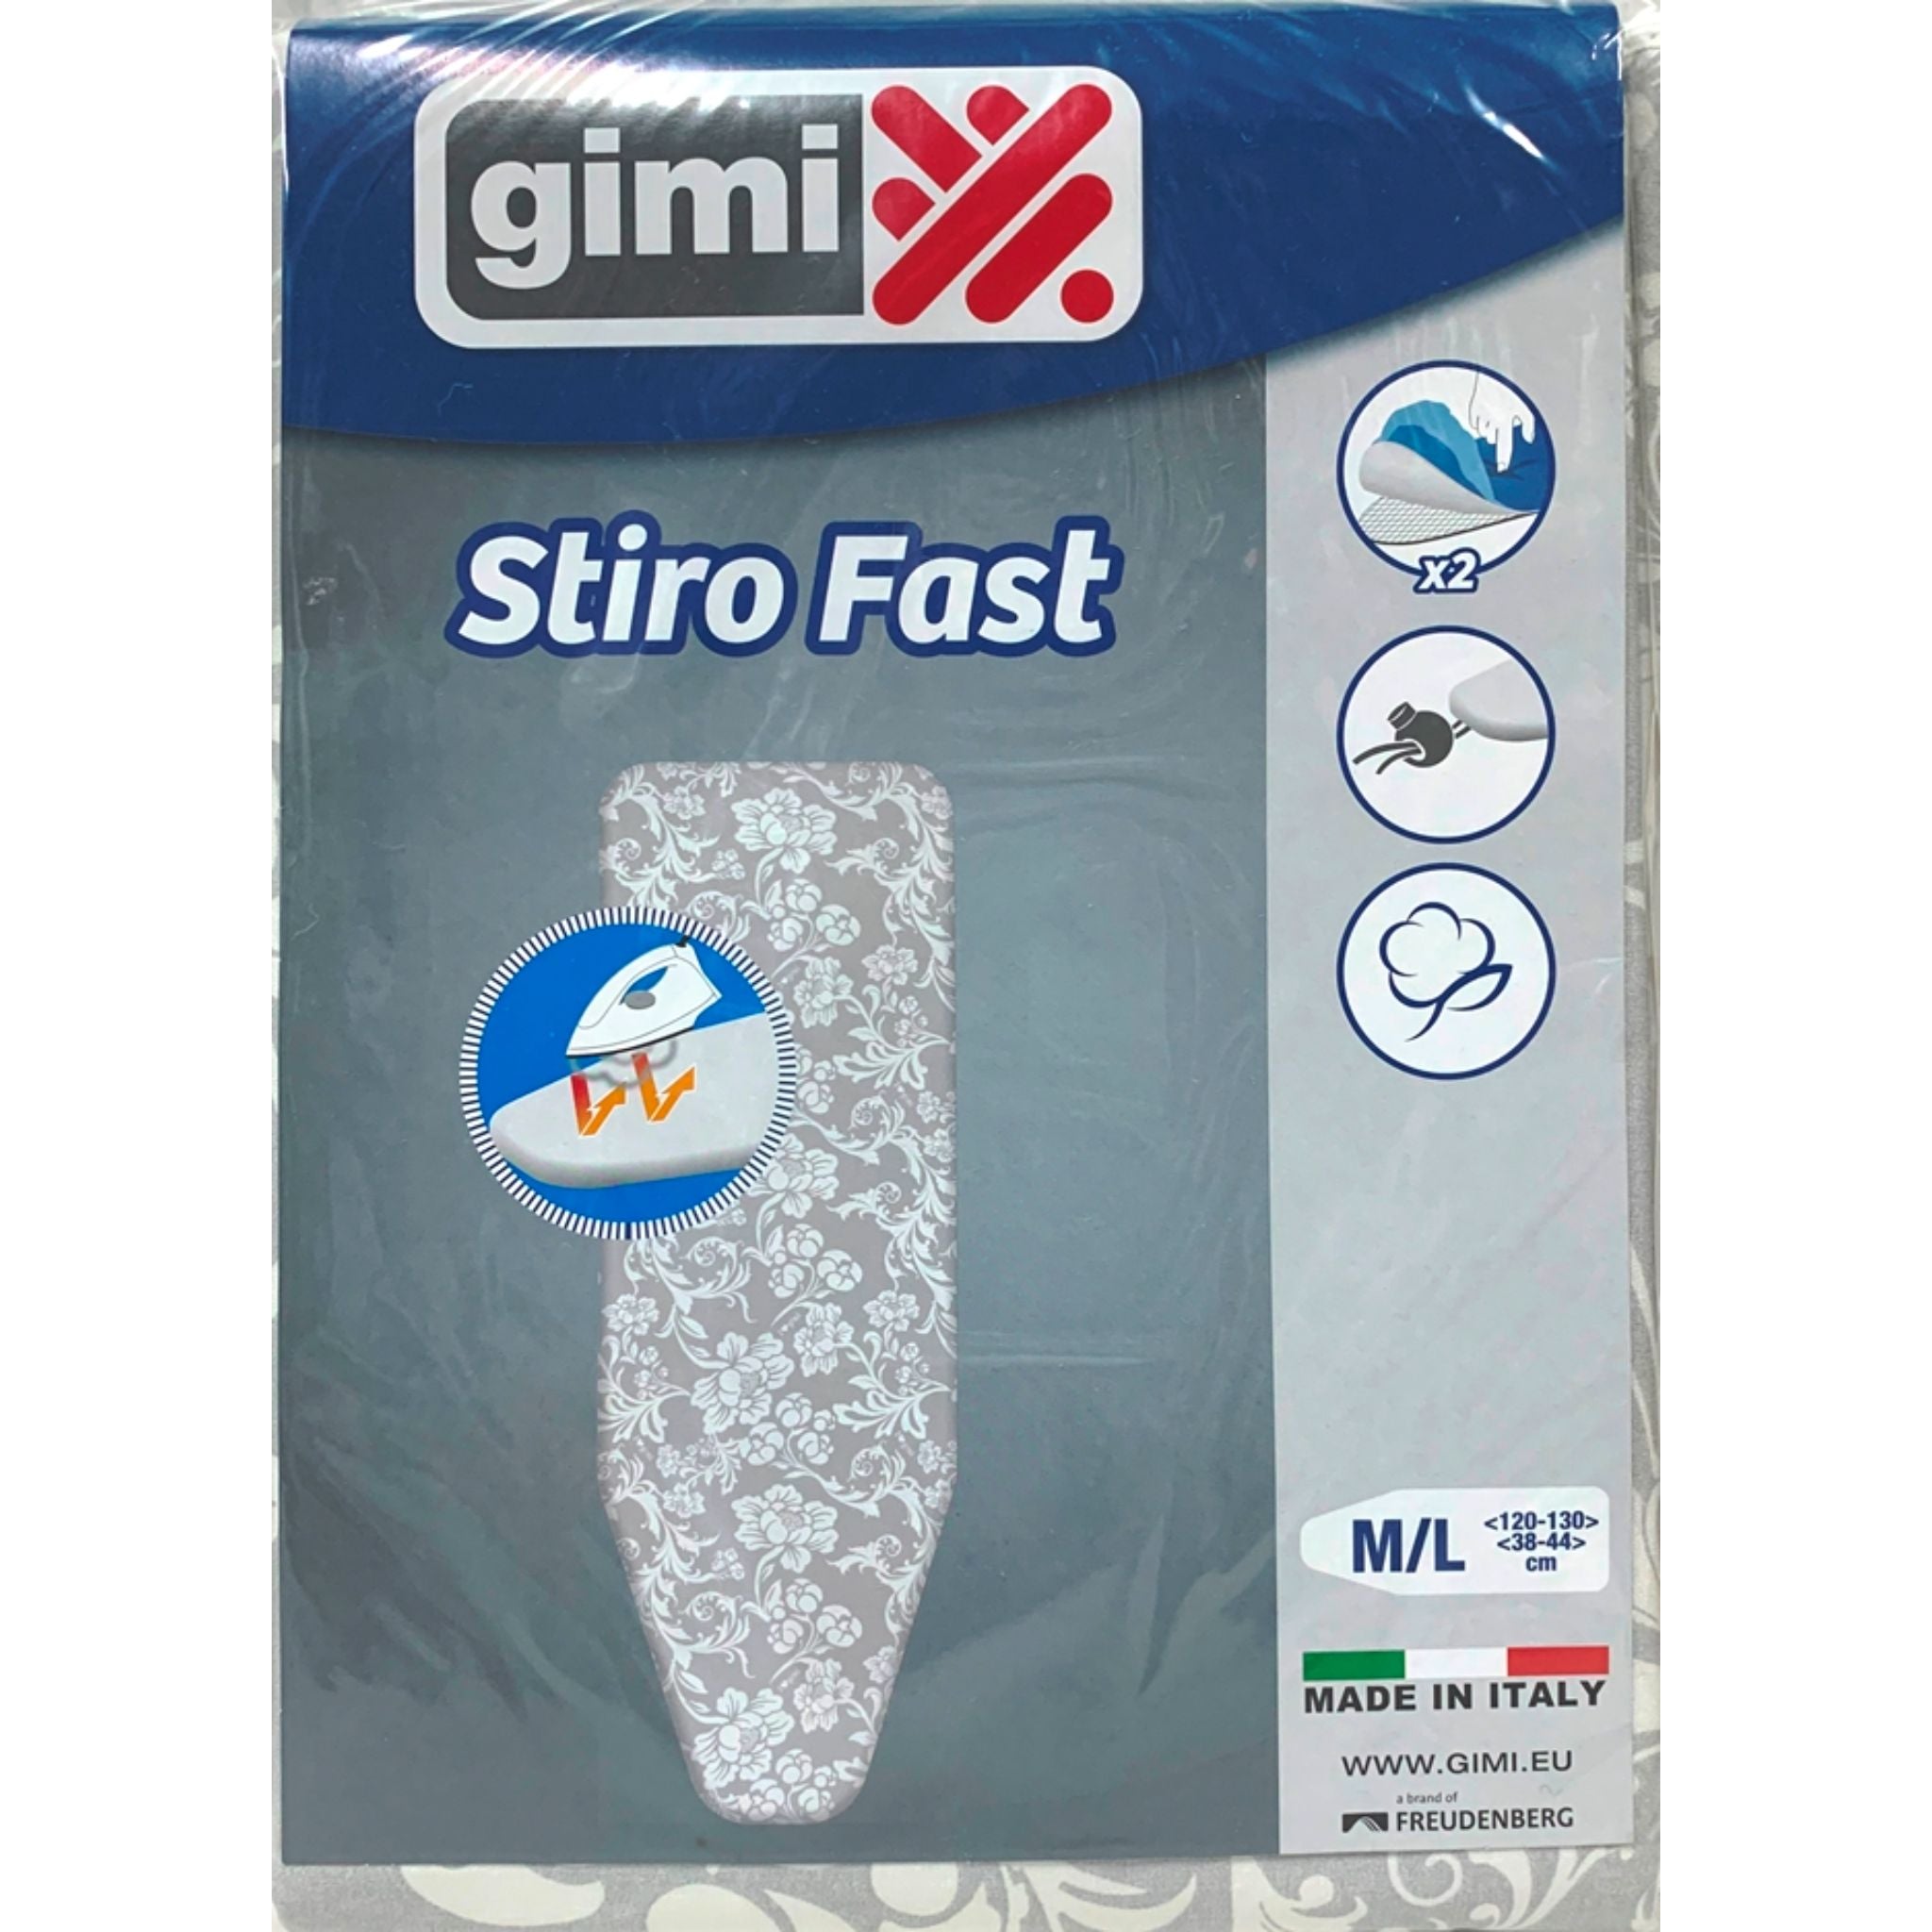 GIMI Iron Board Cover (Stirofast) Grey